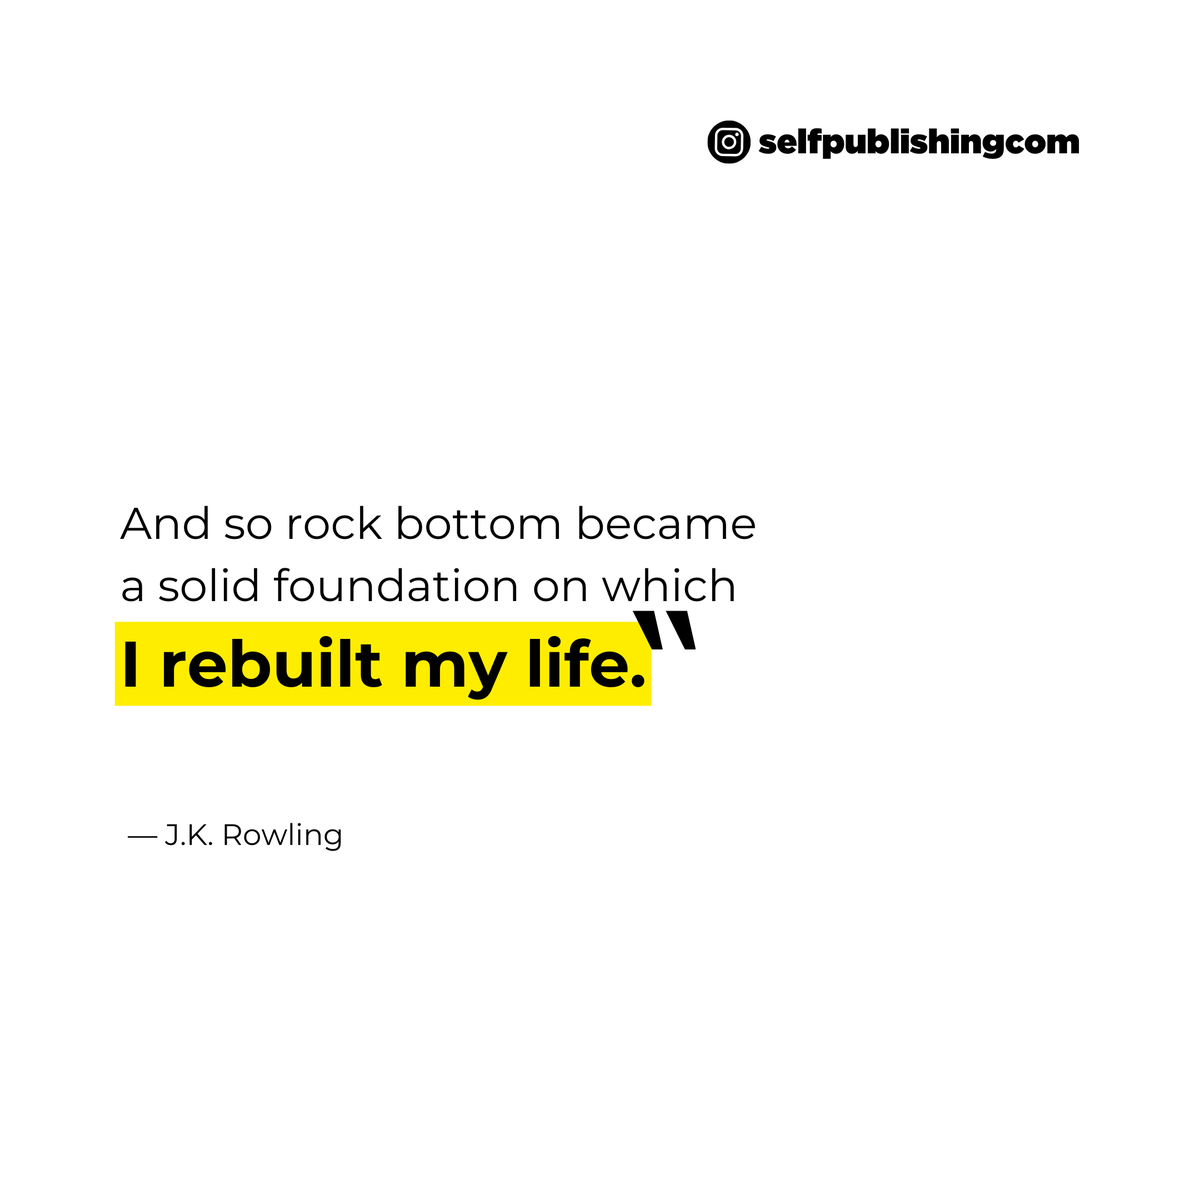 The extraordinary journey of rebuilding your life! 👏 #RebuildingMyLife #WritersAreReaders #SelfPublishing